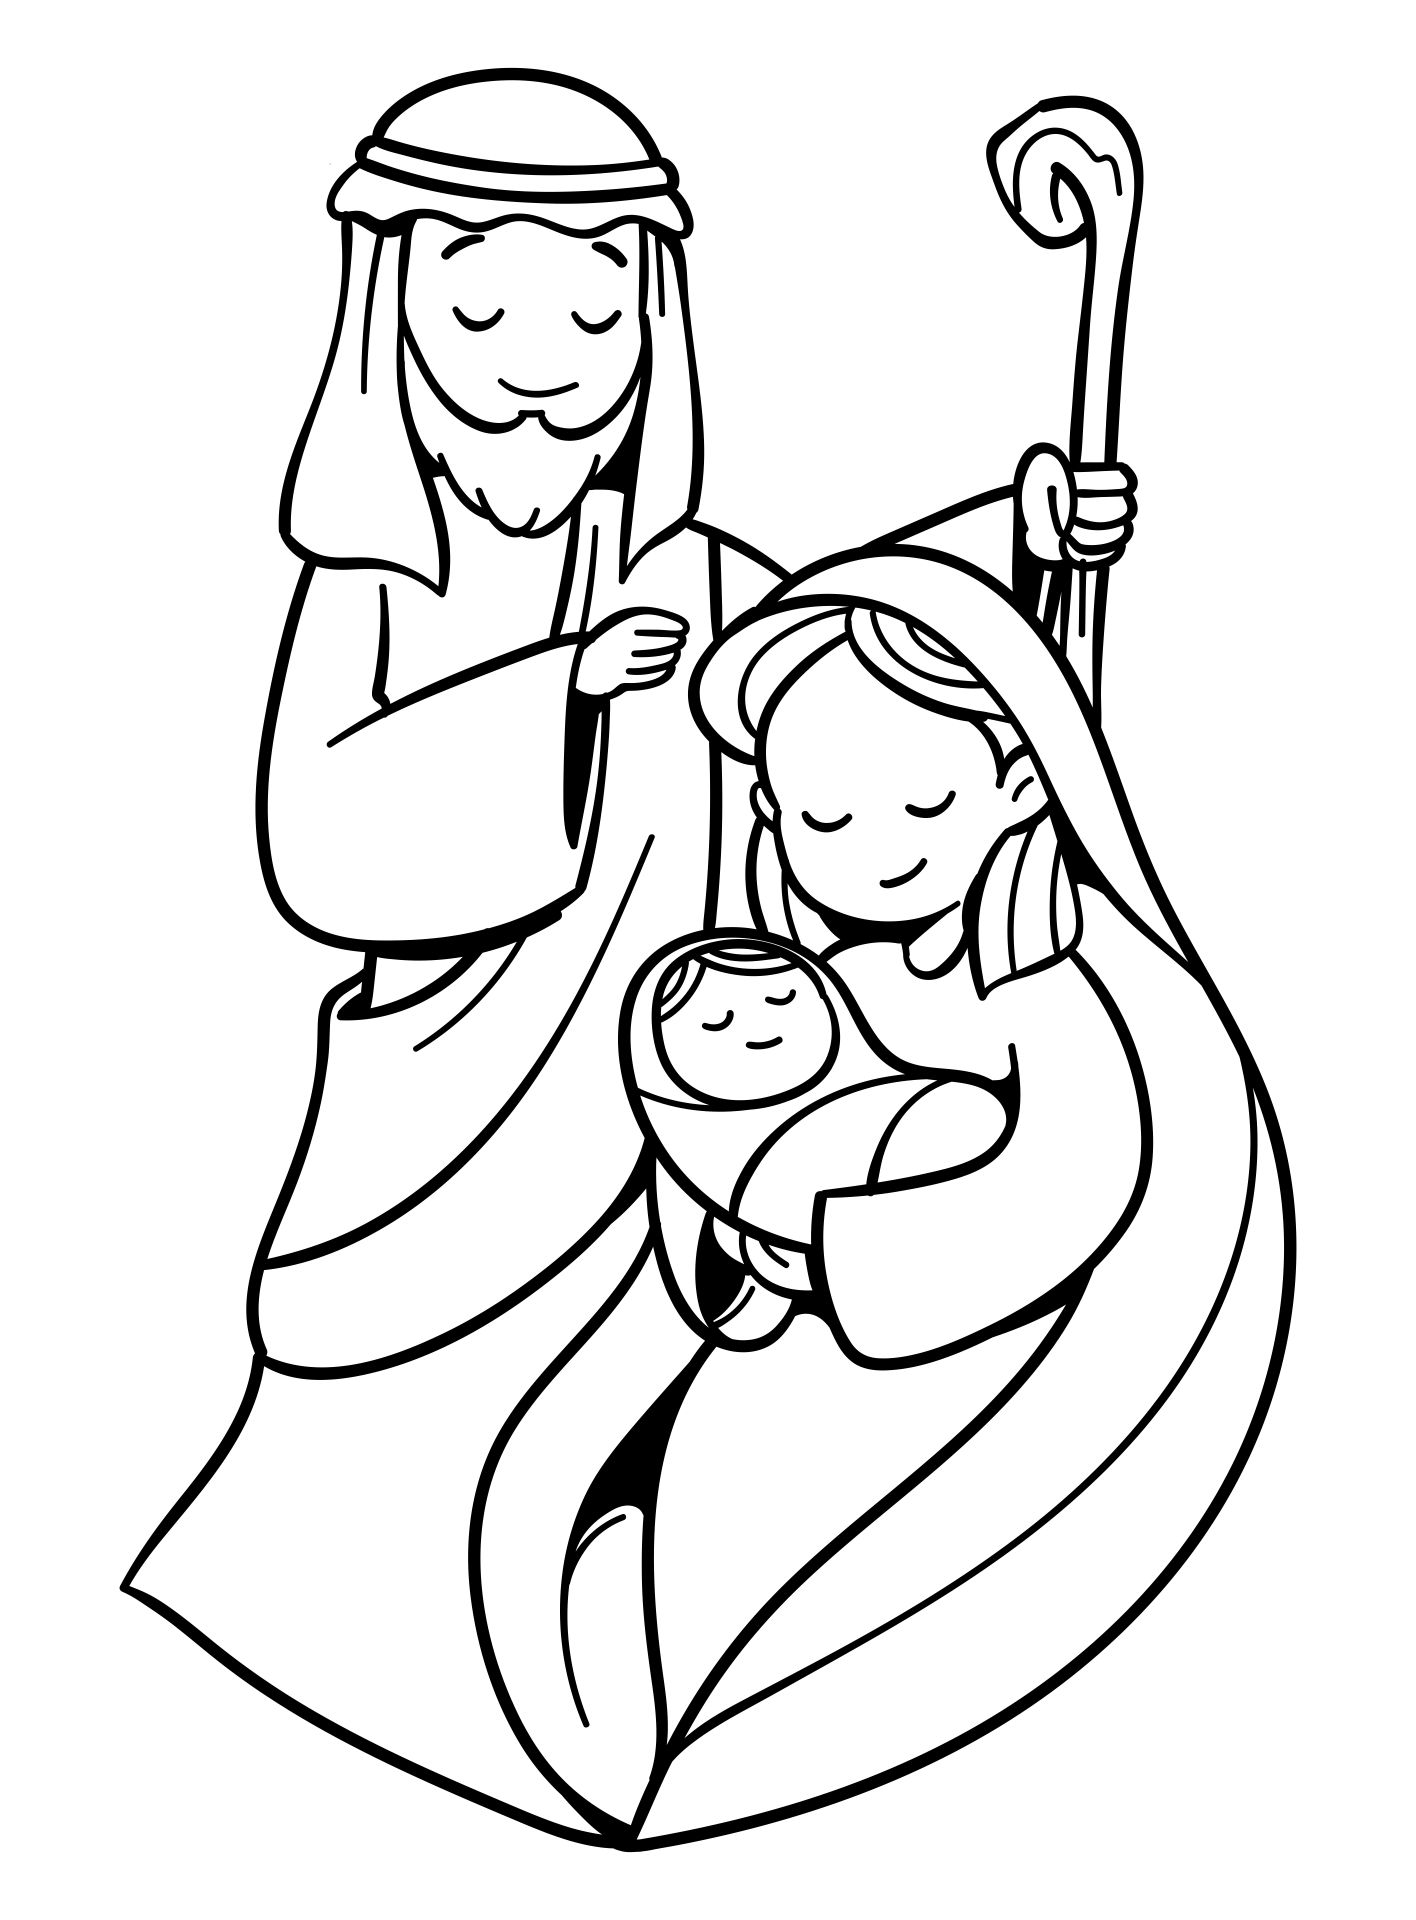 Christmas Nativity Coloring Pages - 15 Free PDF Printables | Printablee